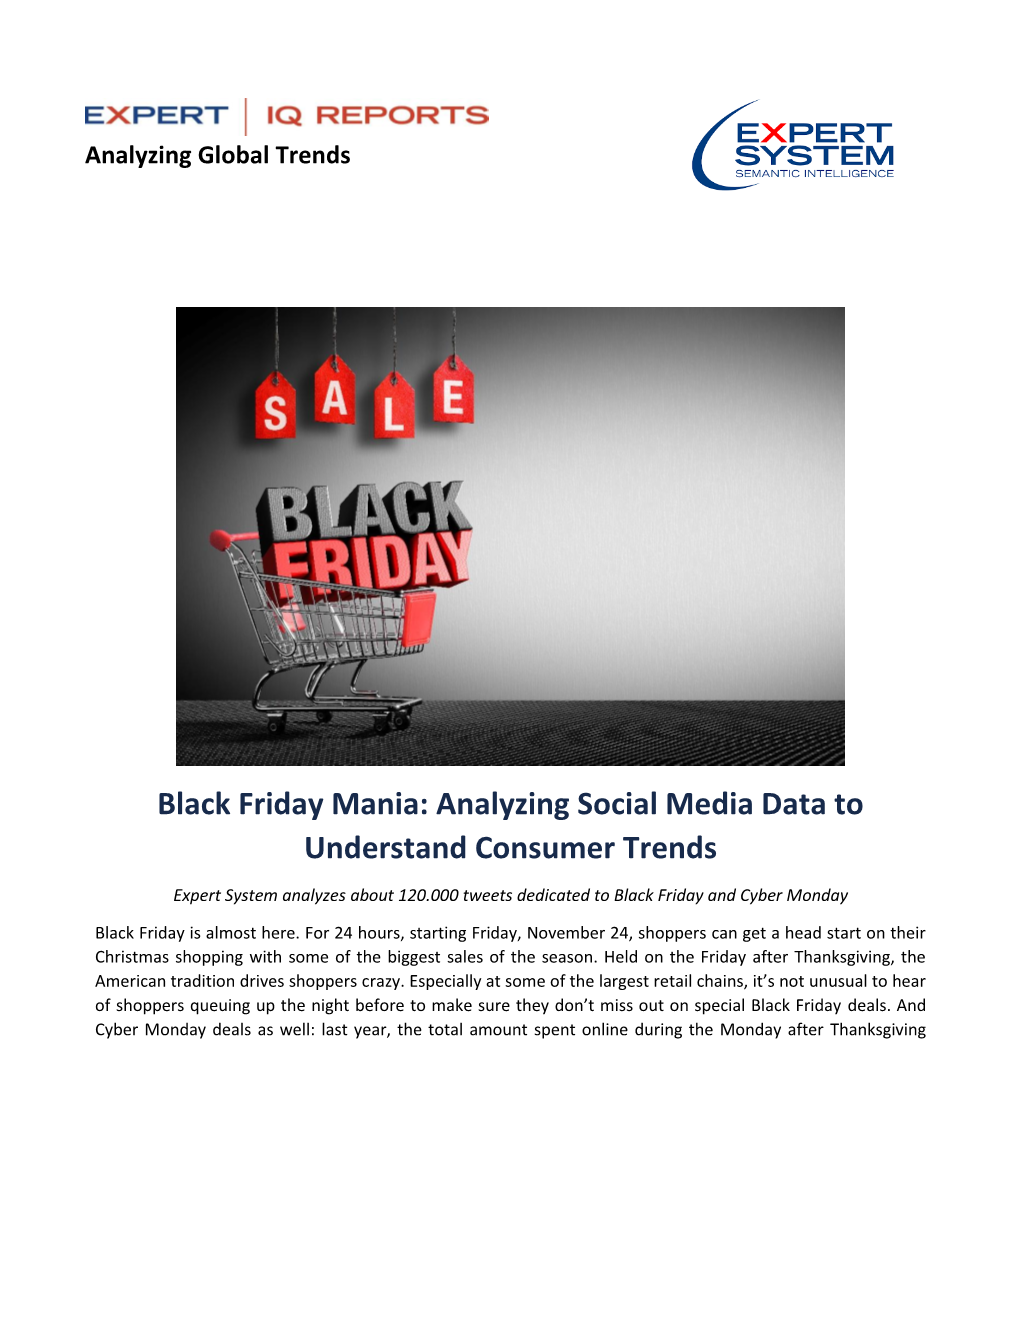 Black Friday Mania: Analyzing Social Media Data to Understand Consumer Trends